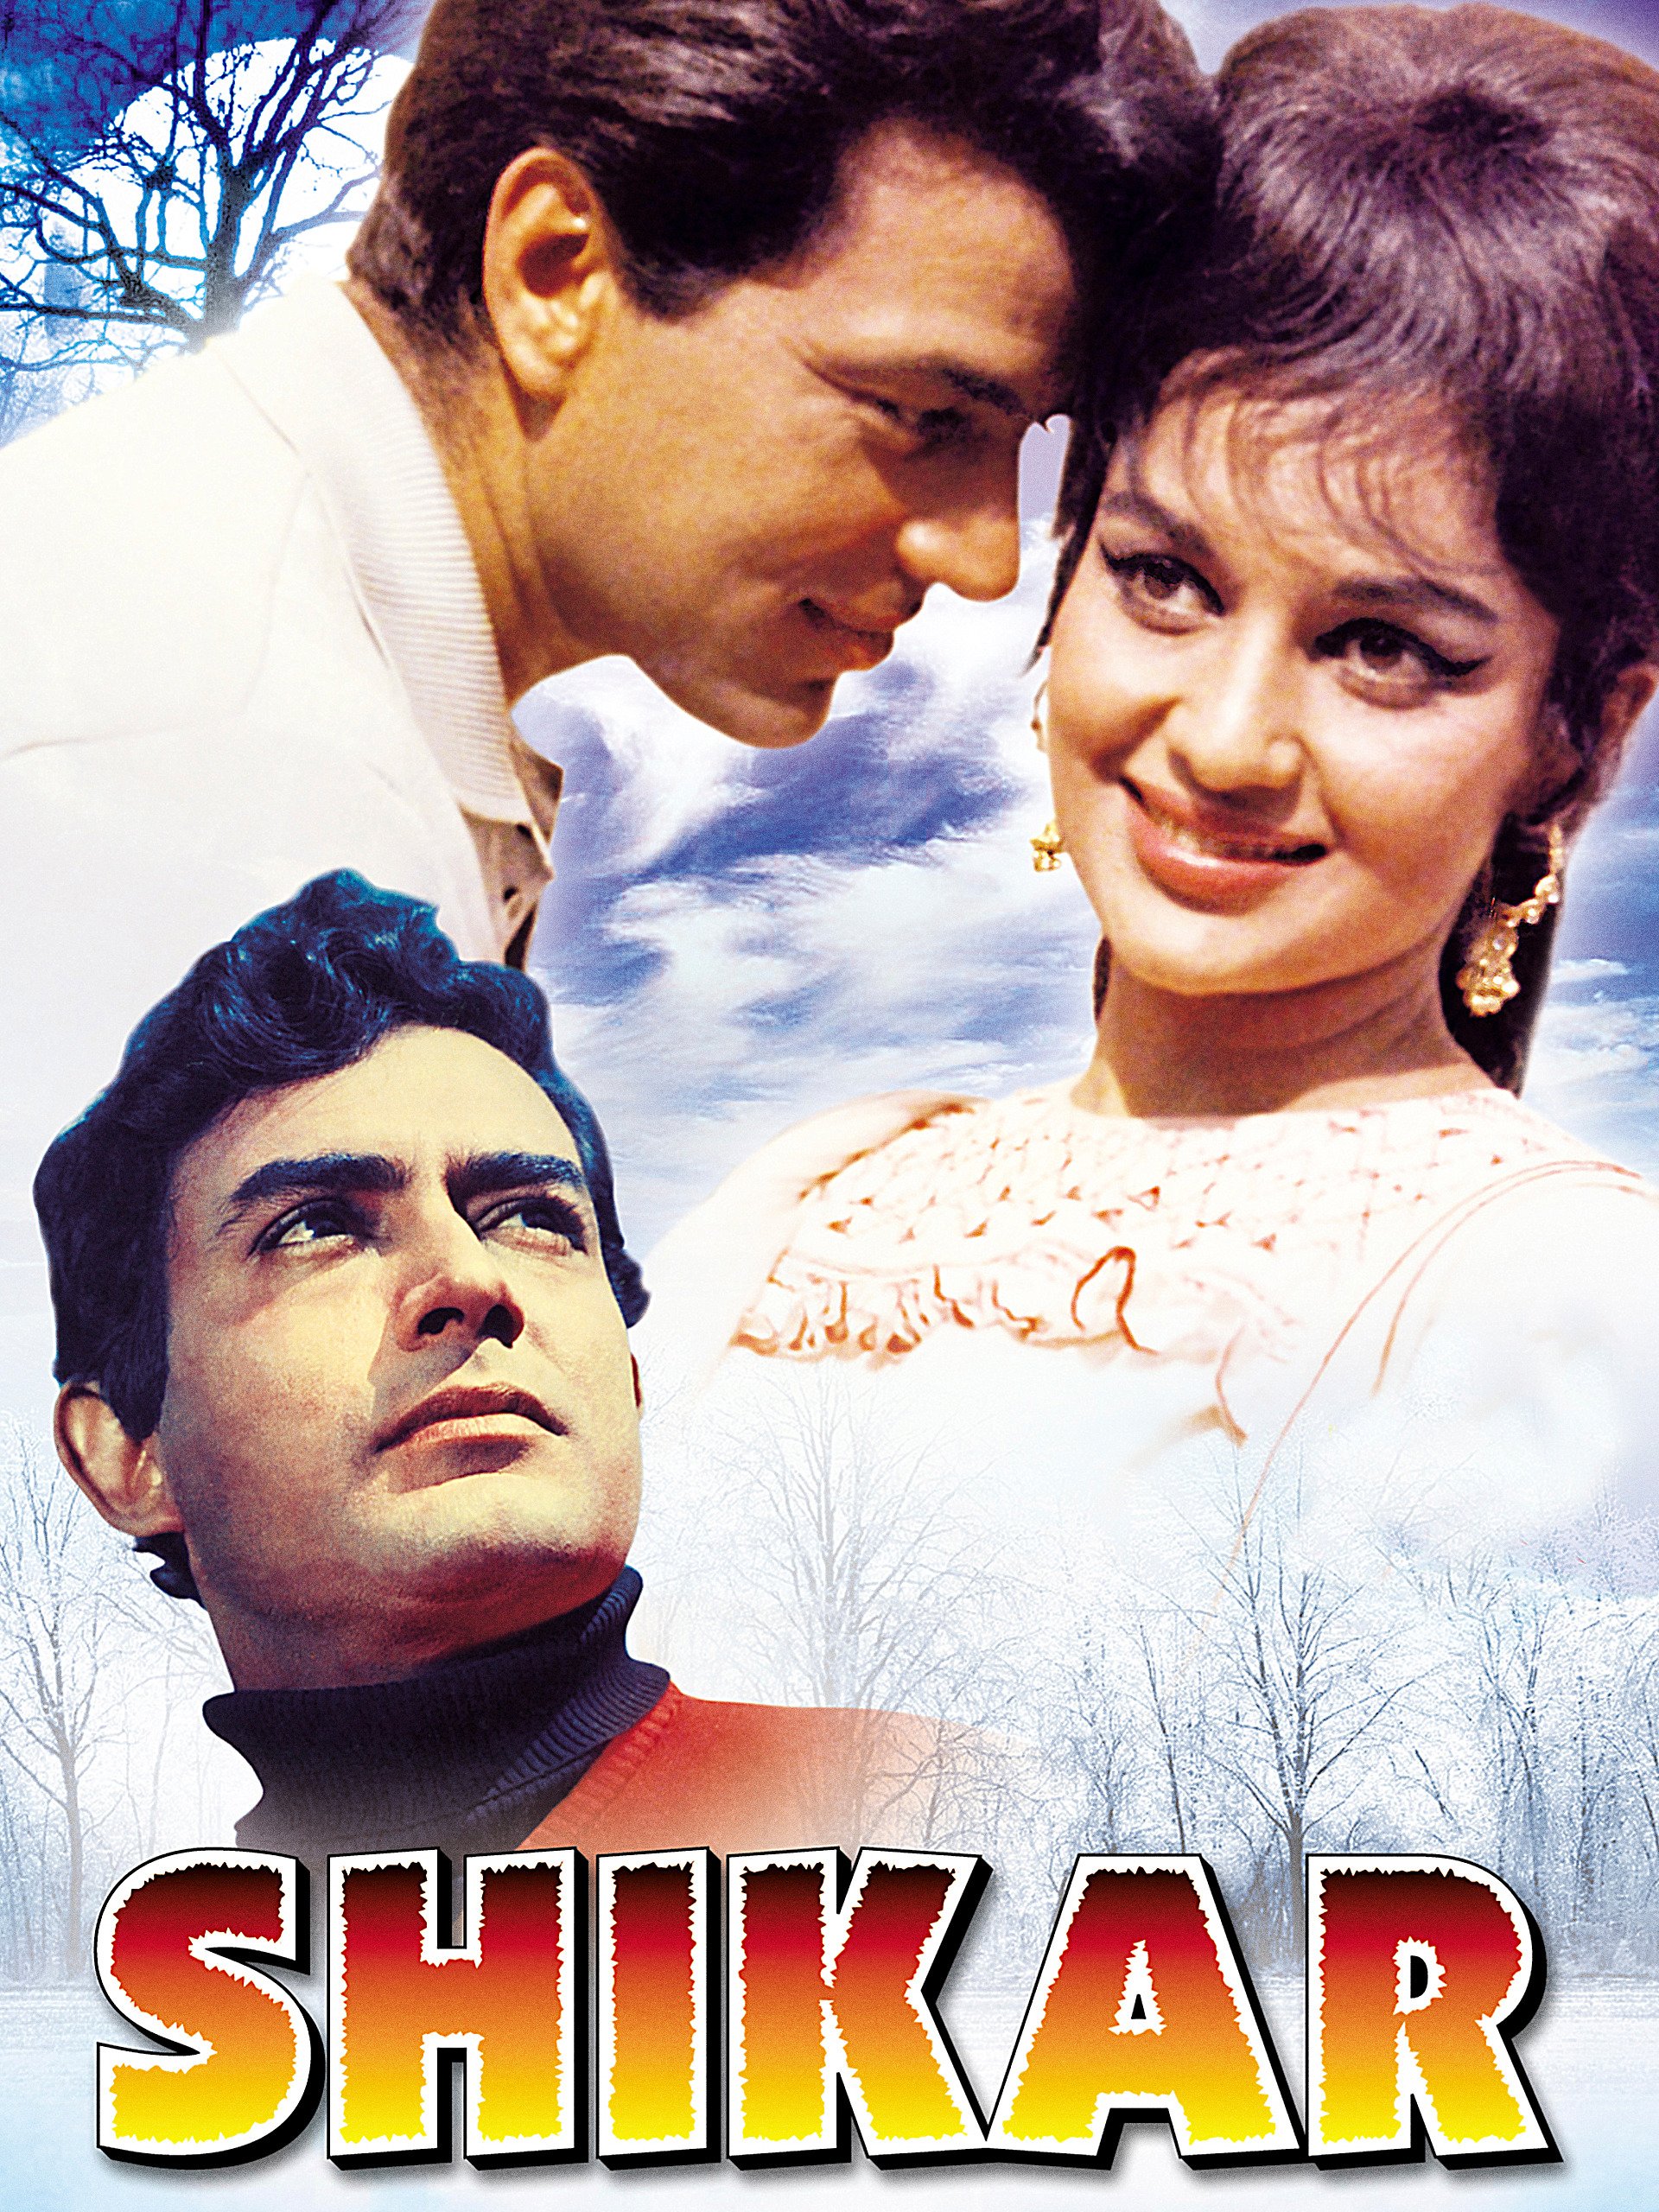 Shikar 1968 18966 Poster.jpg